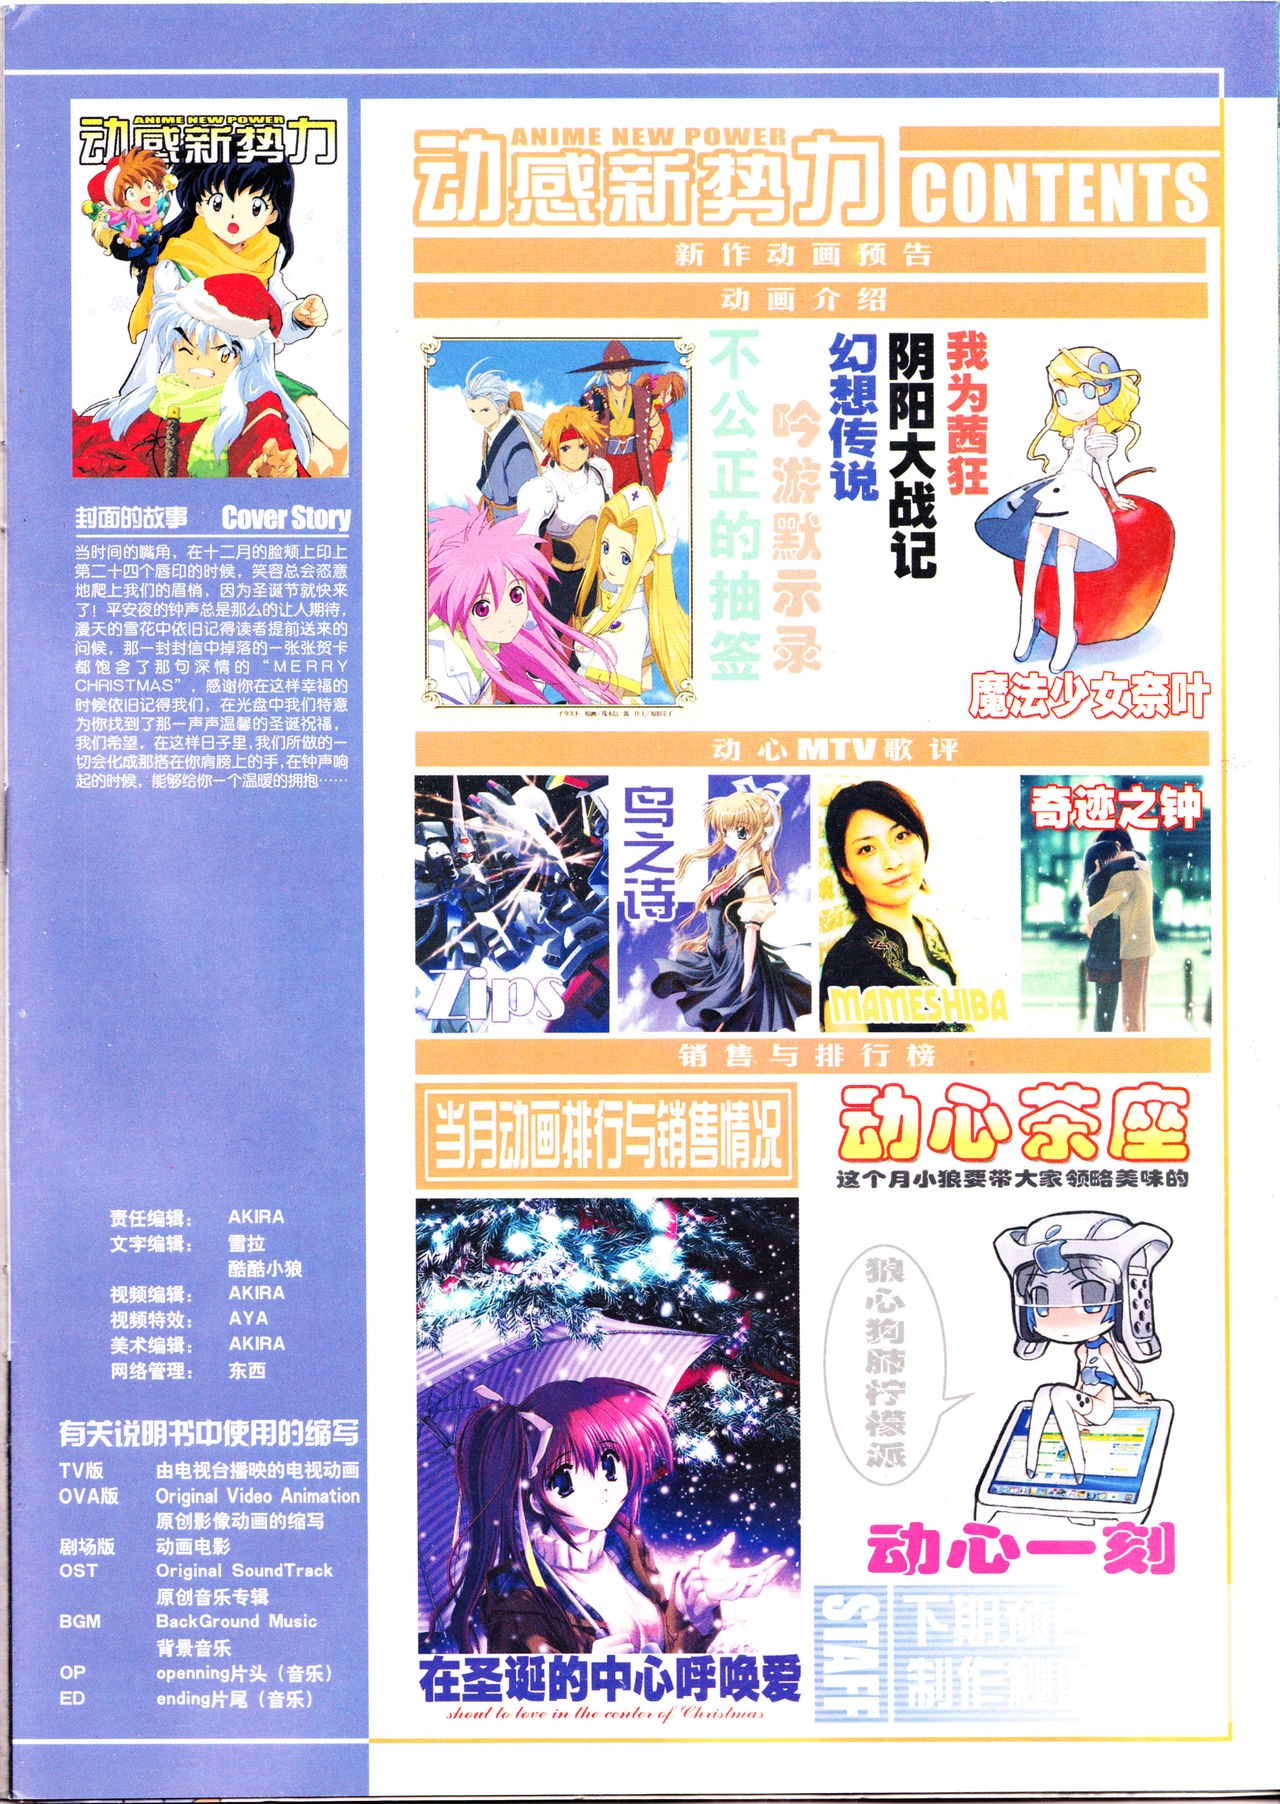 Anime New Power Vol.023 2